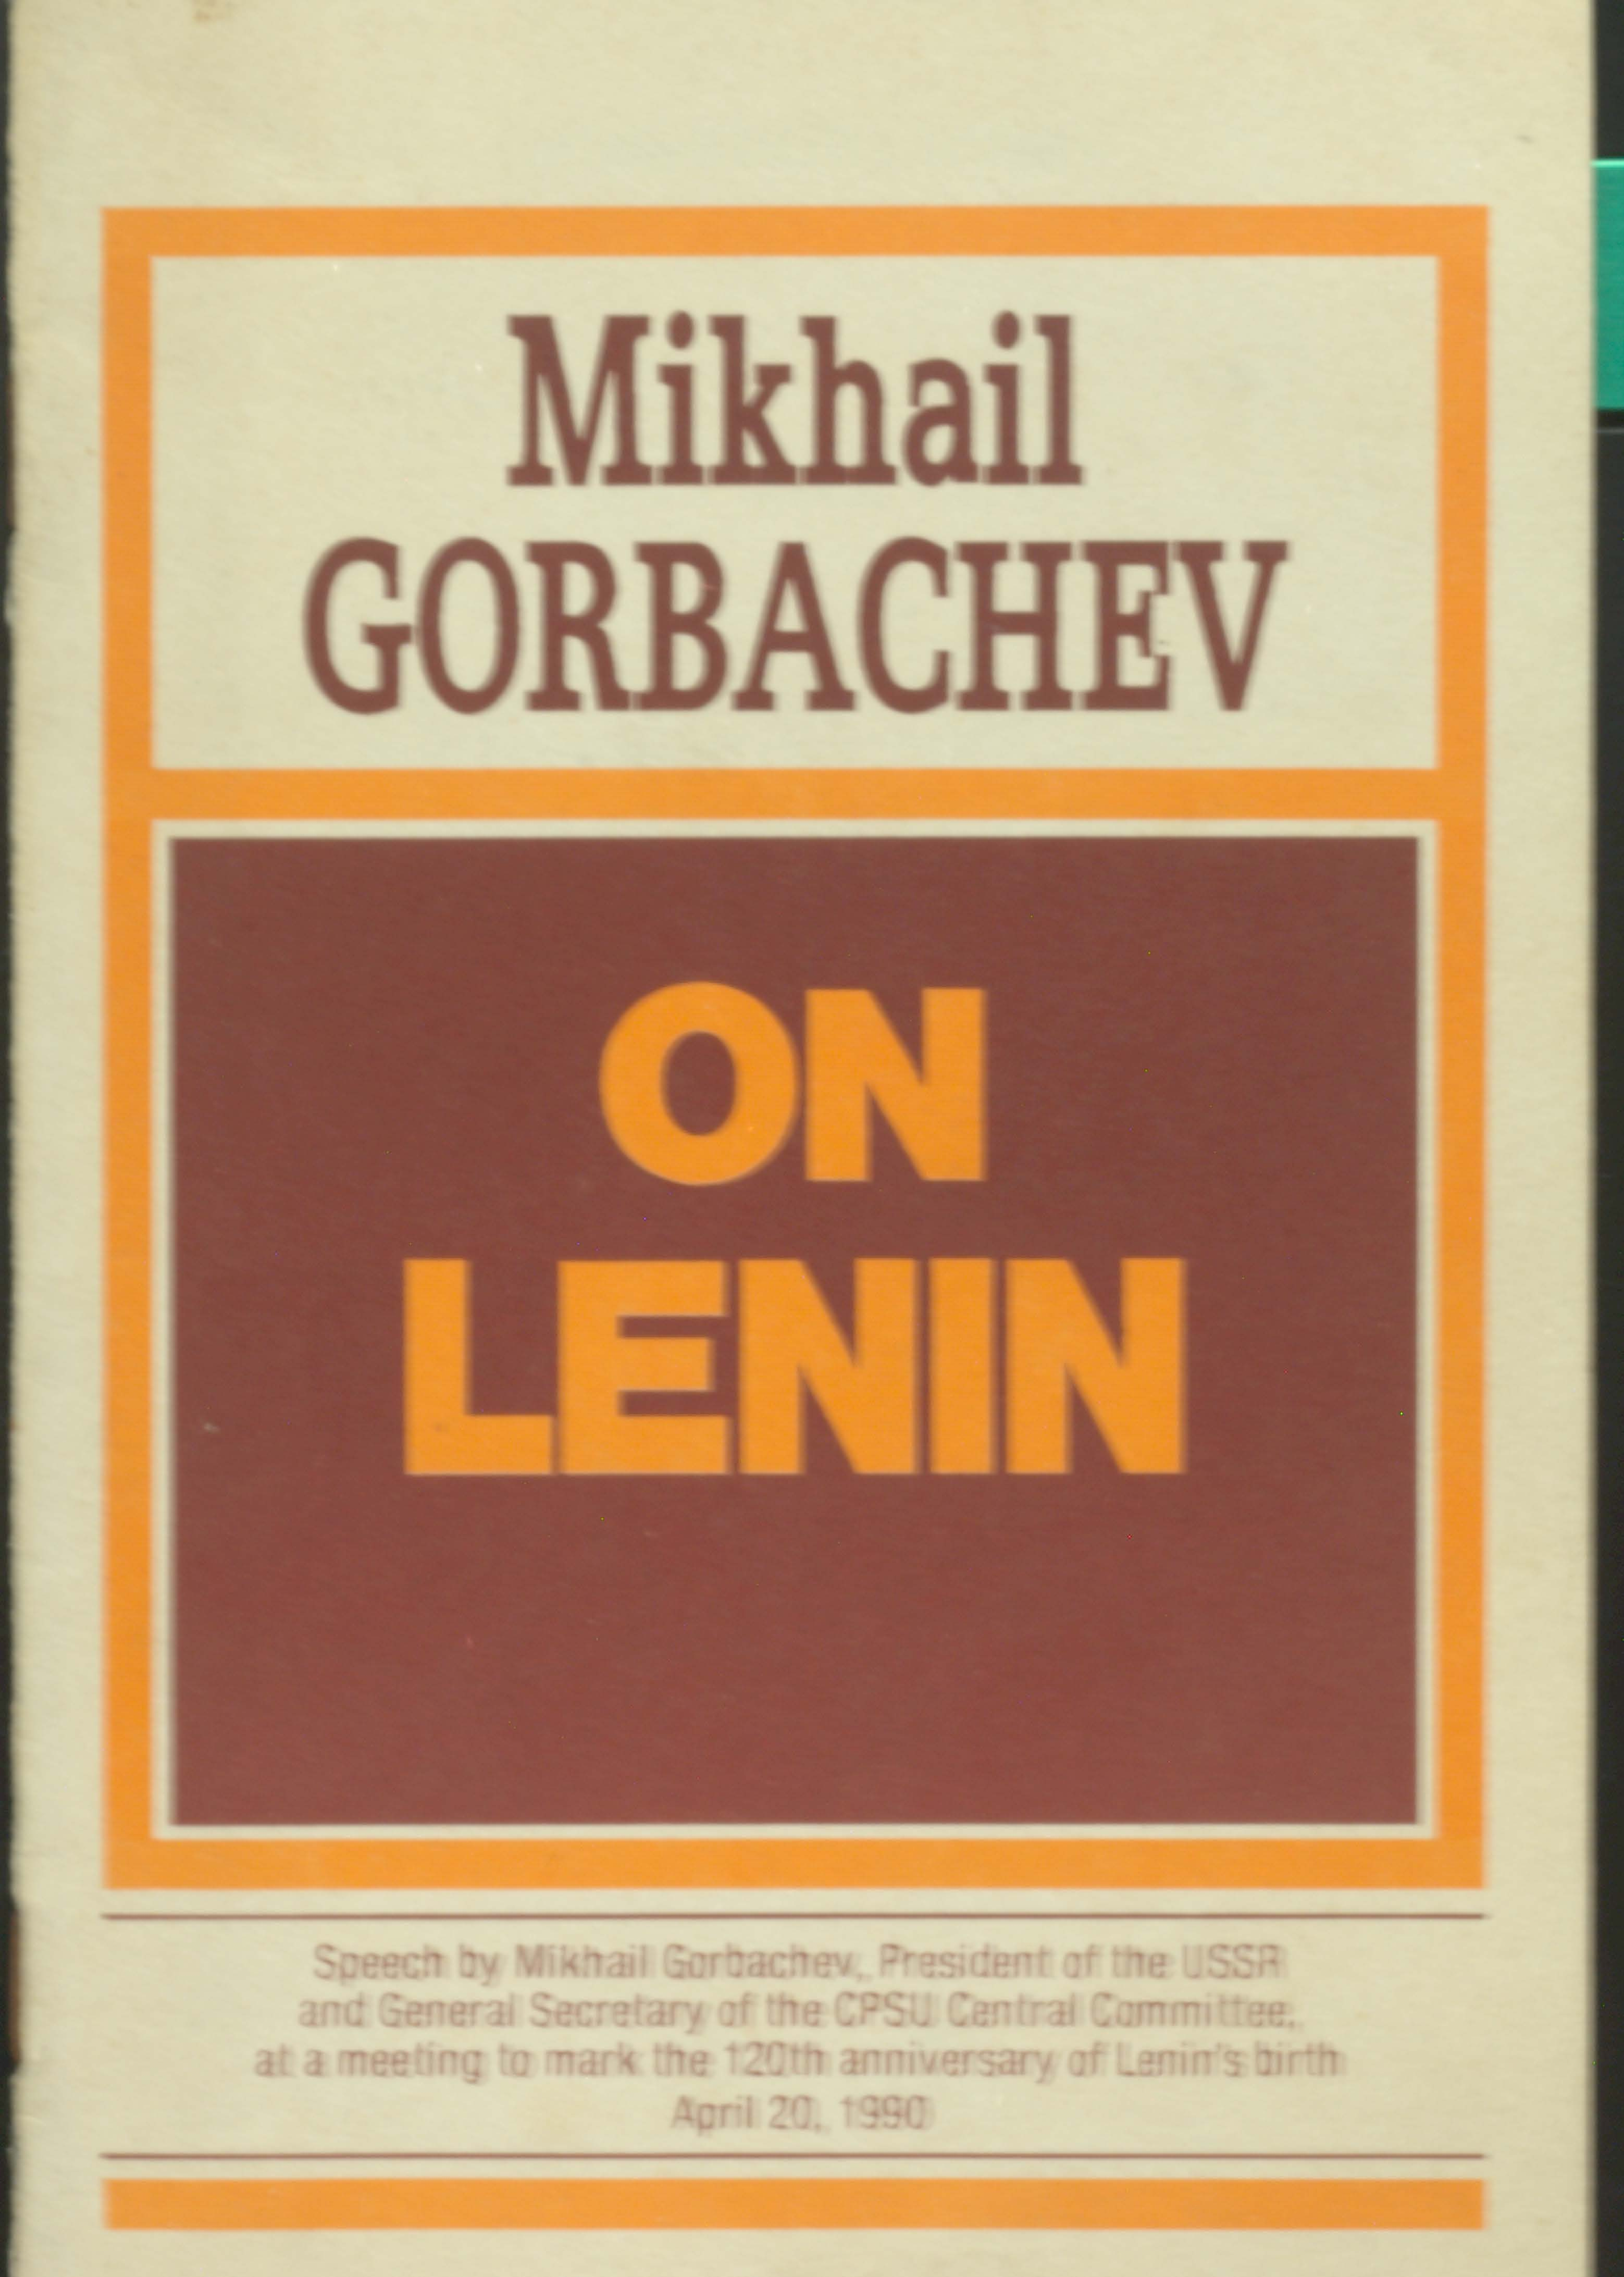 Mikhail gorbachev (on lenin)